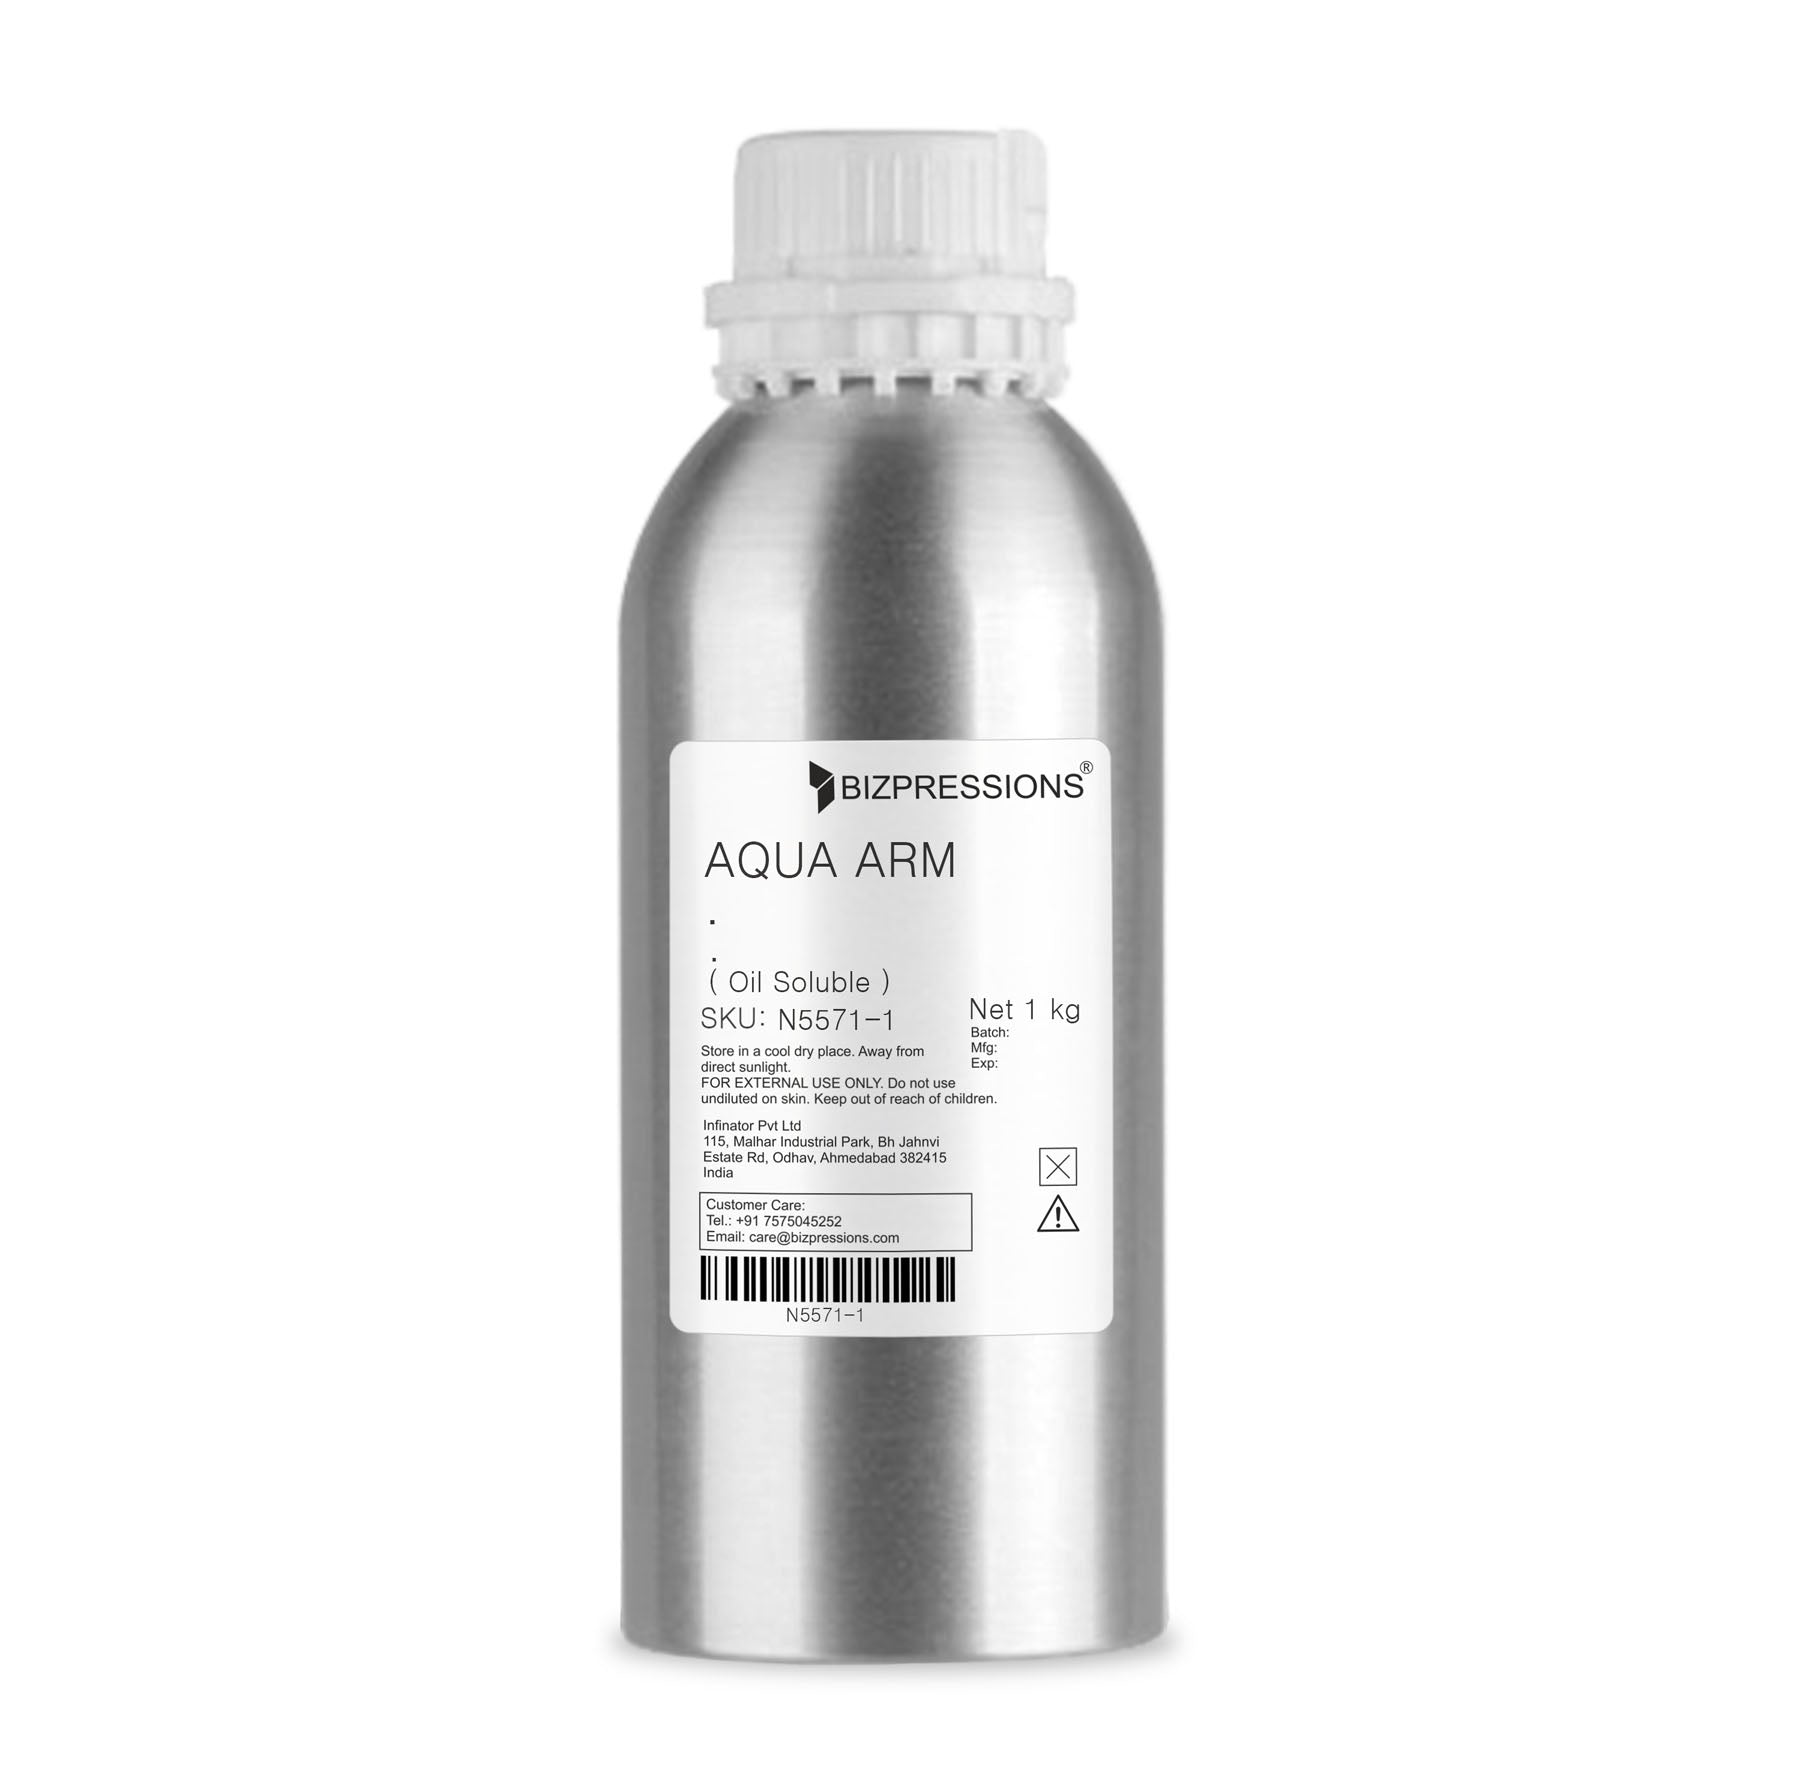 AQUA ARM - Fragrance ( Oil Soluble ) - 1 kg